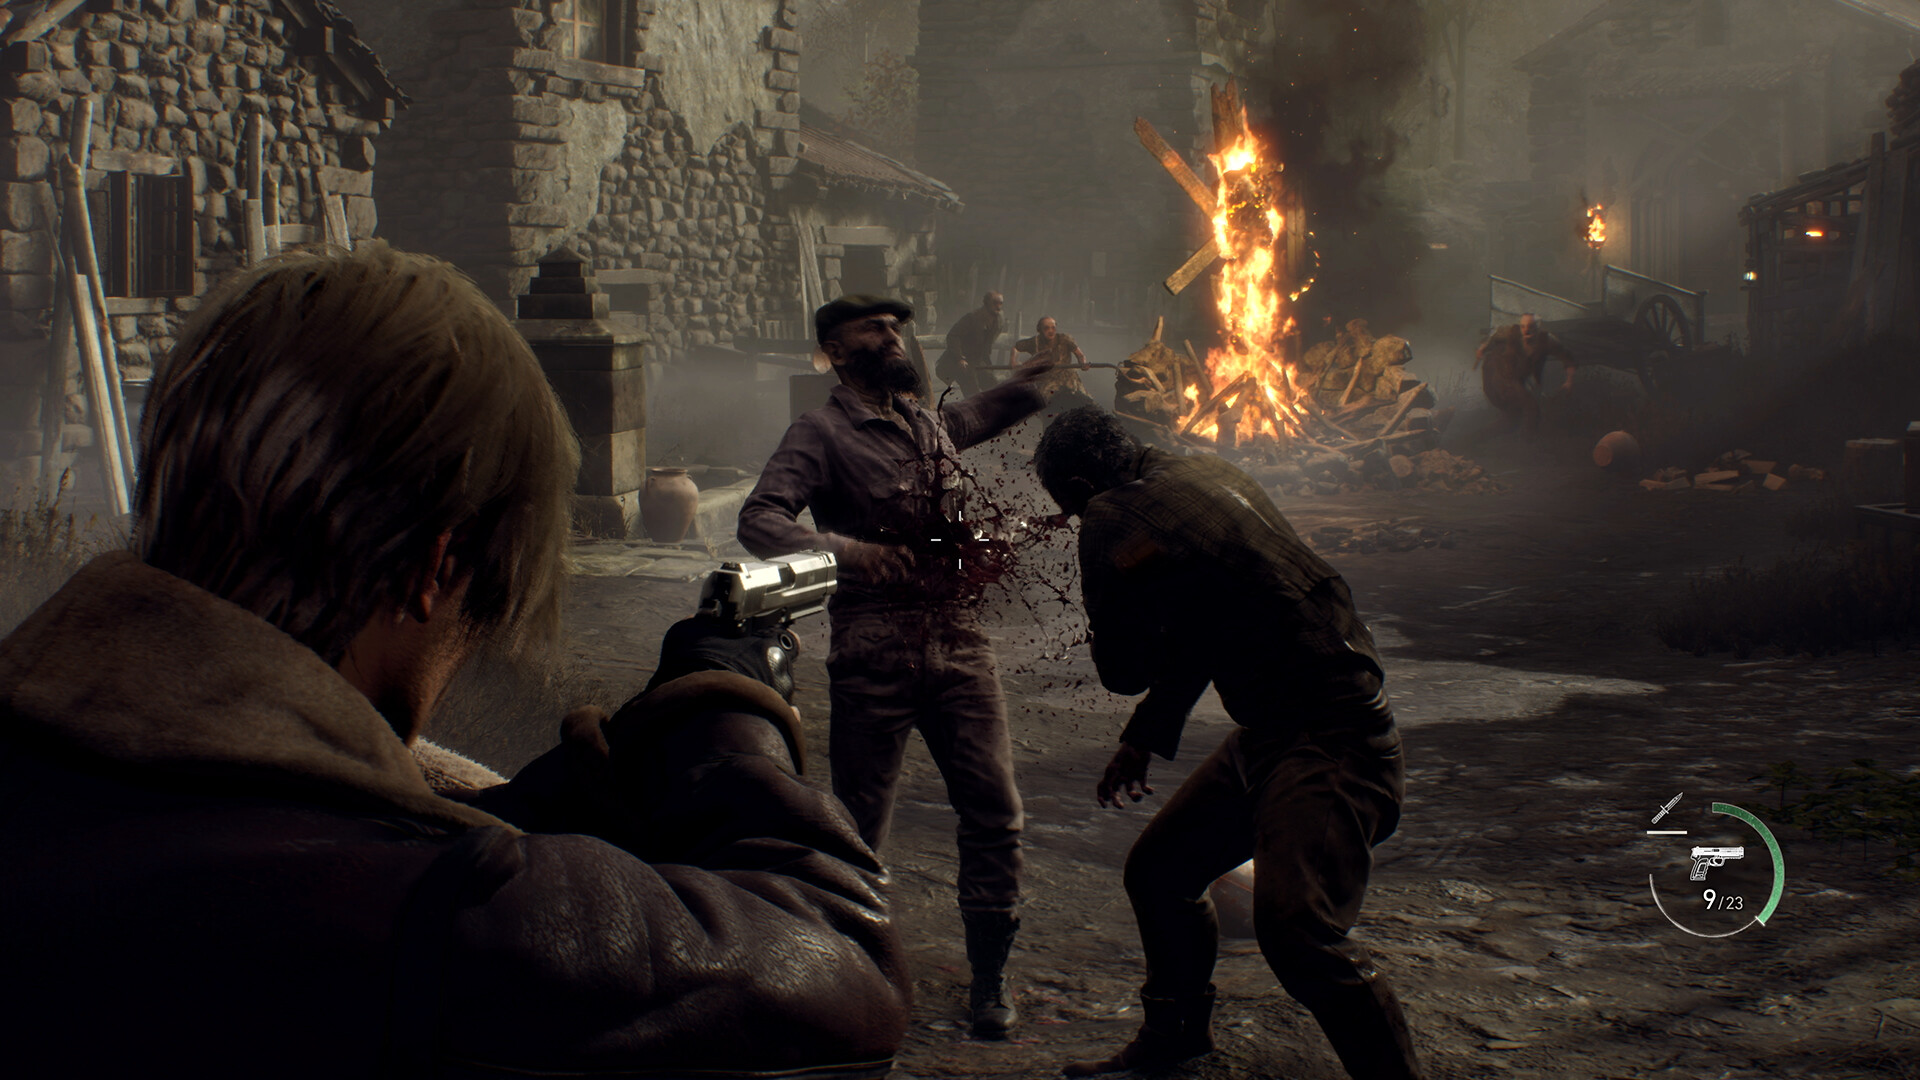 Save 34% on Resident Evil 4 on Steam